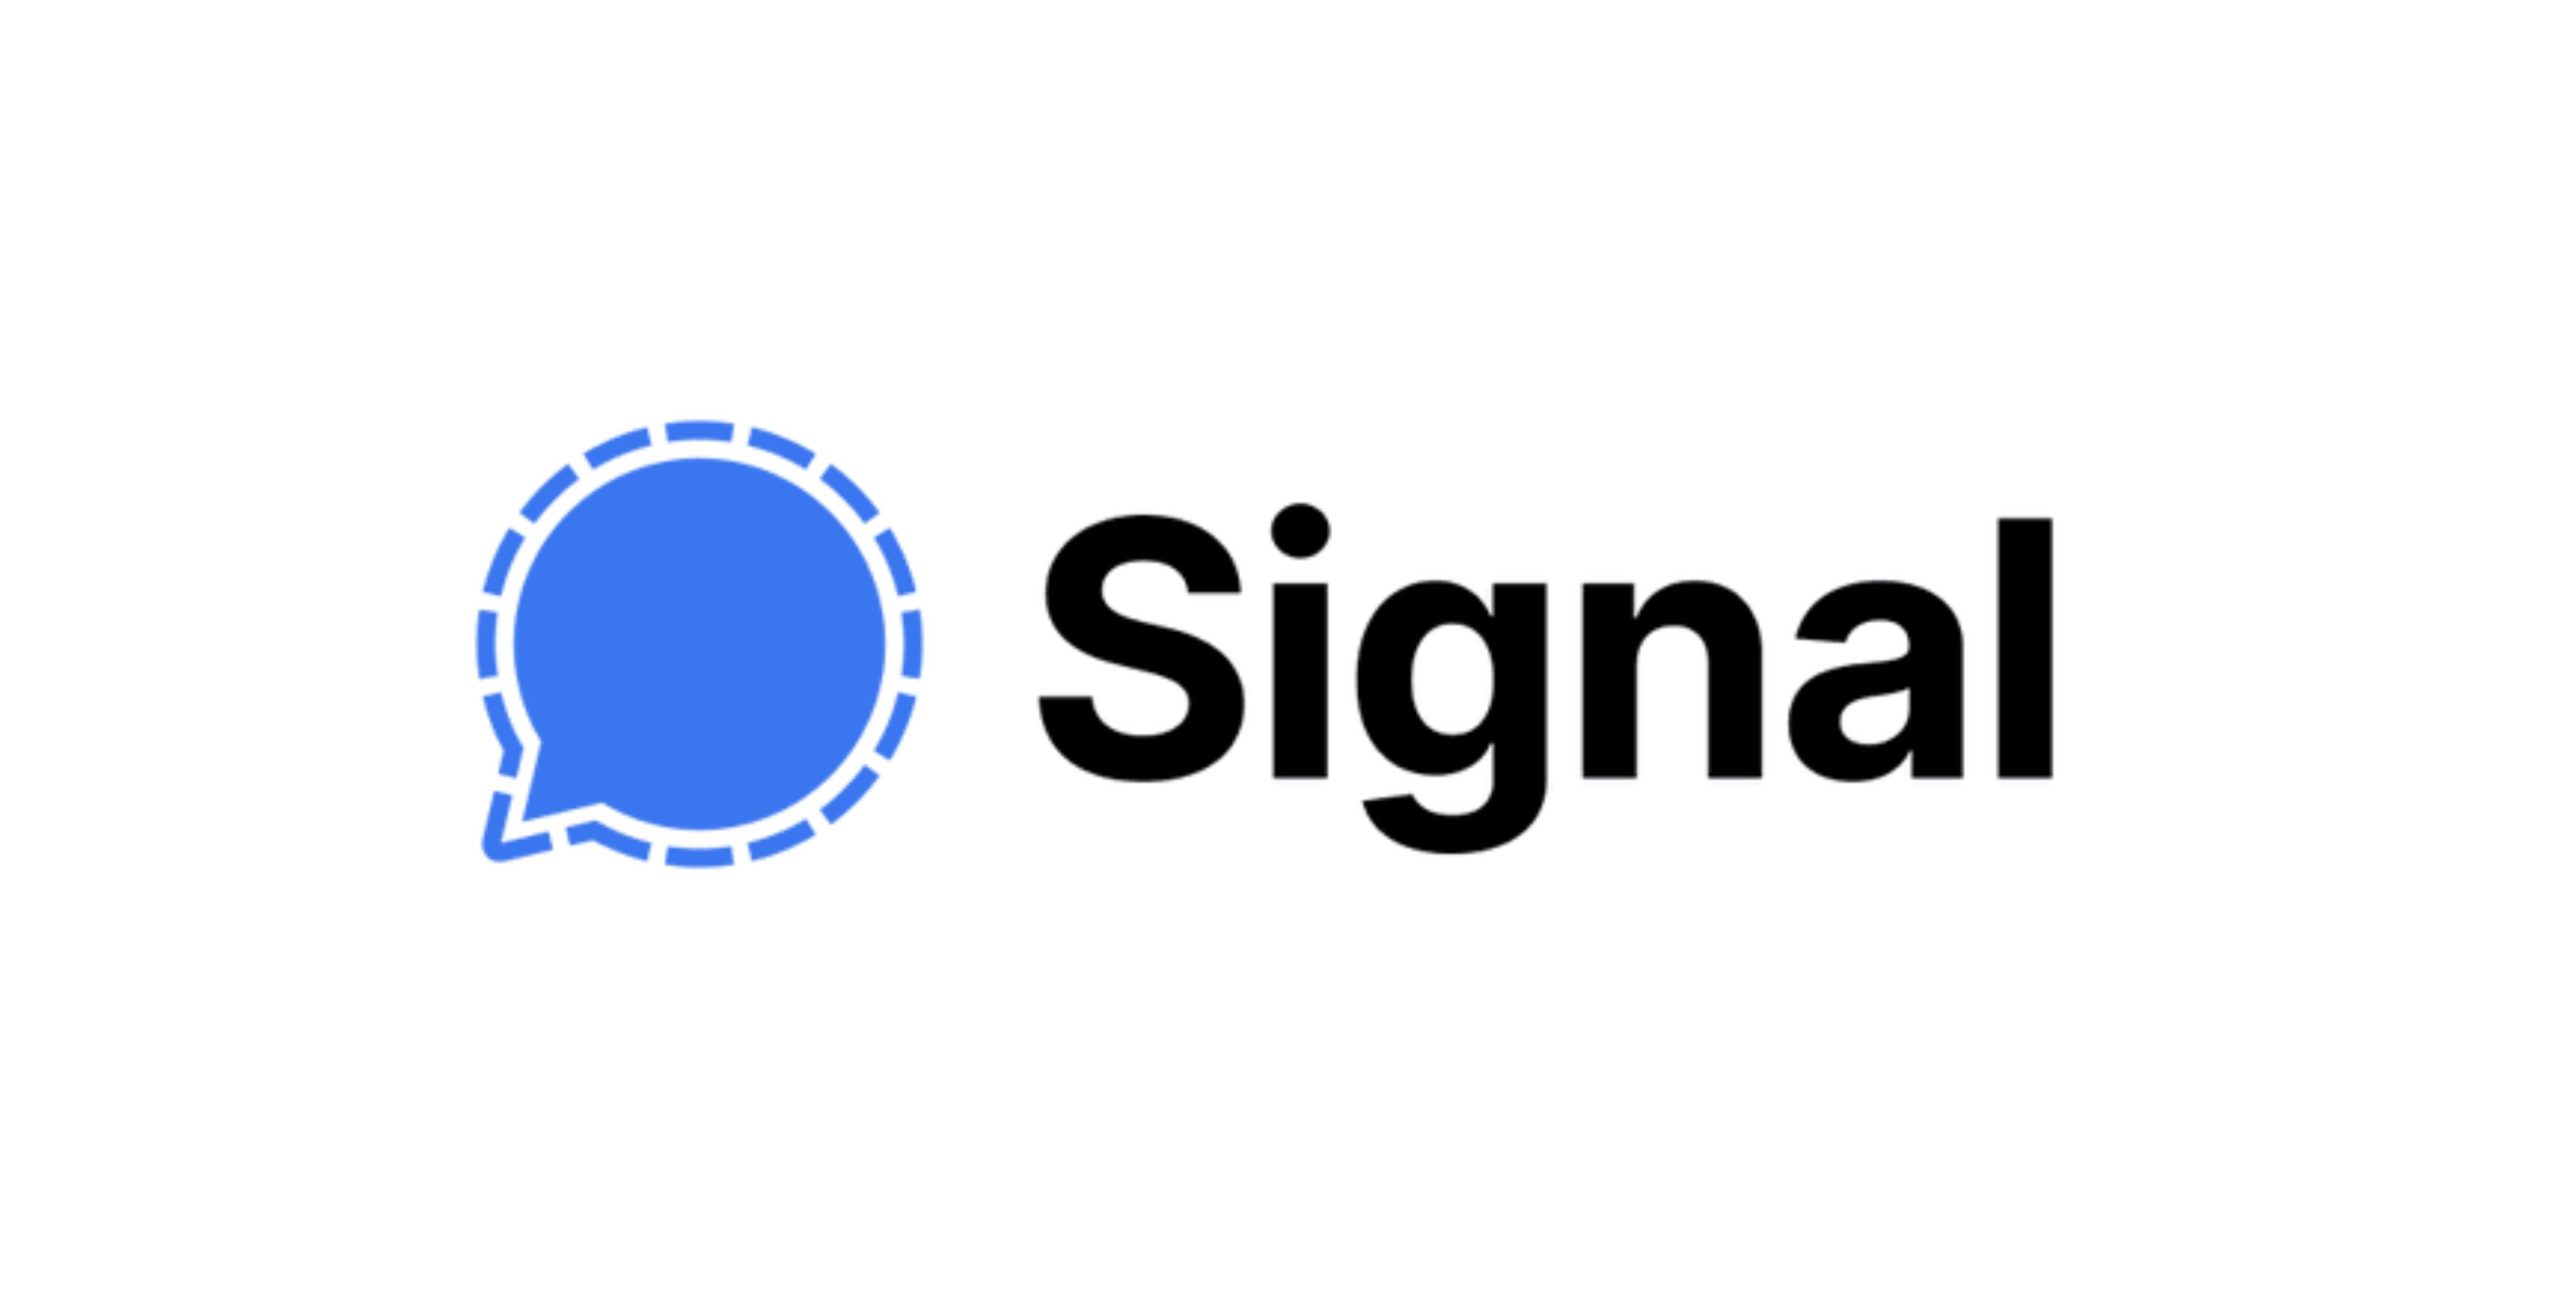 signal app security